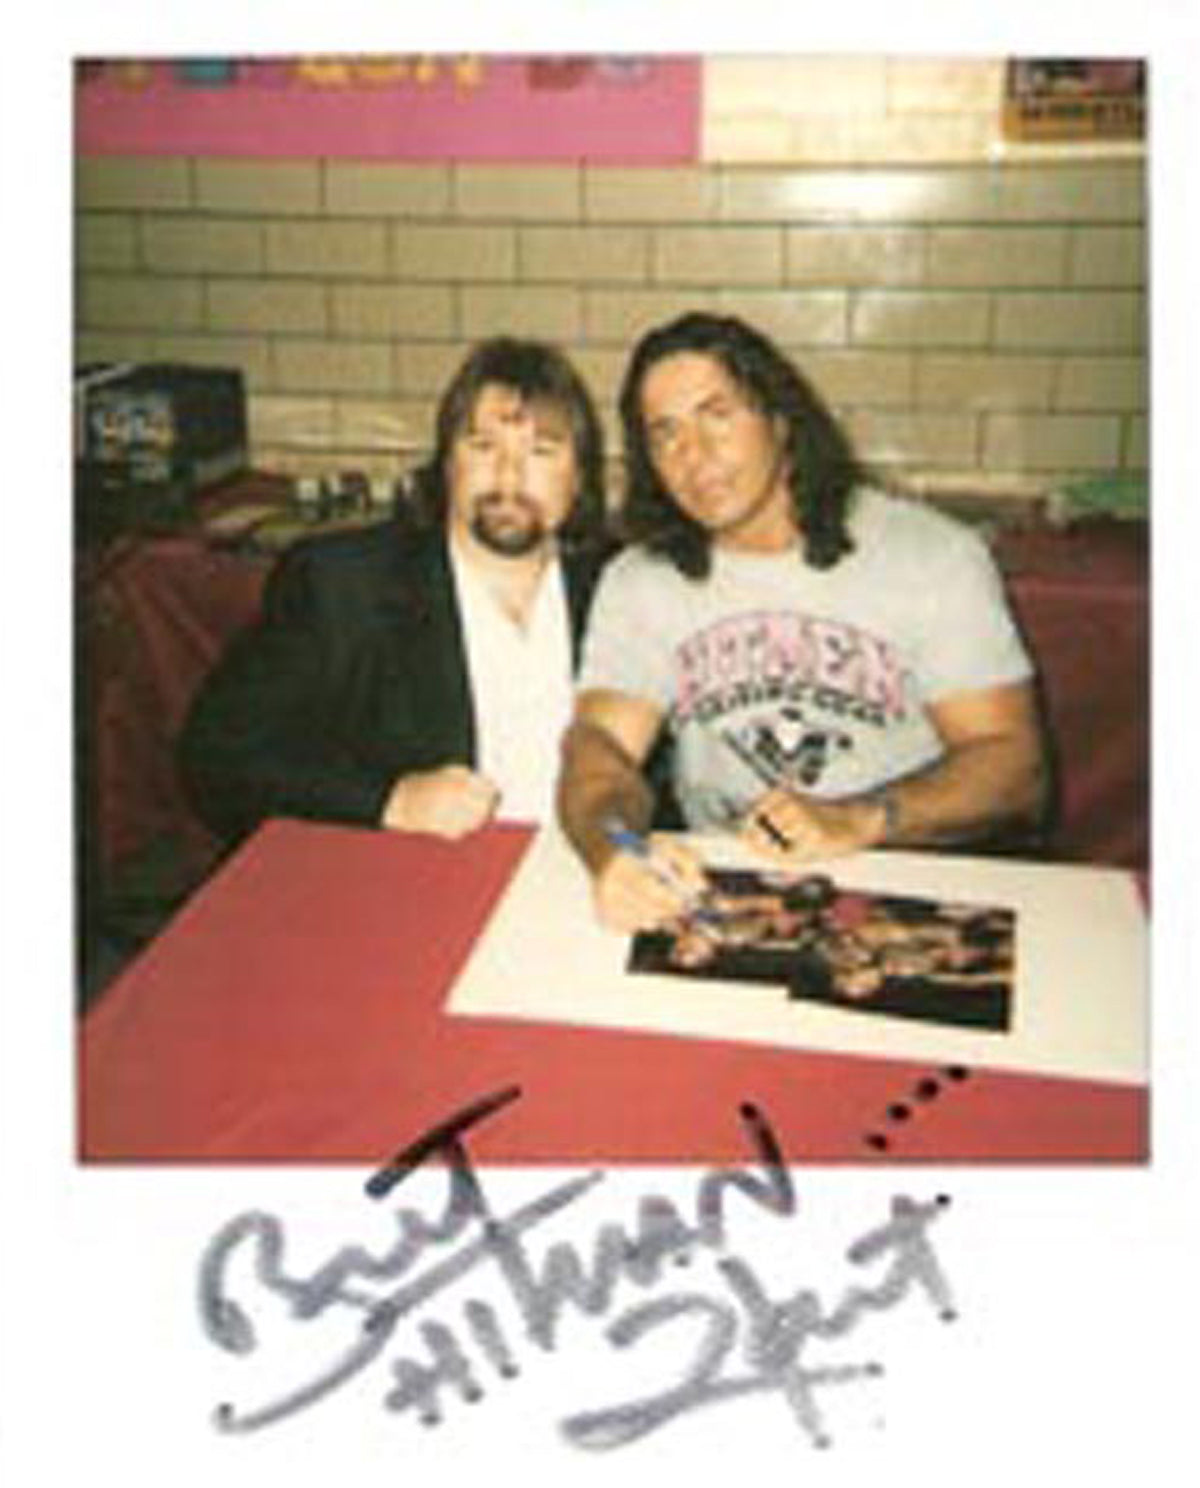 BD165  Shawn Michaels Missy Hyatt Bret Hart  Steiner Brothers  Fatu  Autographed VERY RARE  Vintage Wrestling Magazine w/COA